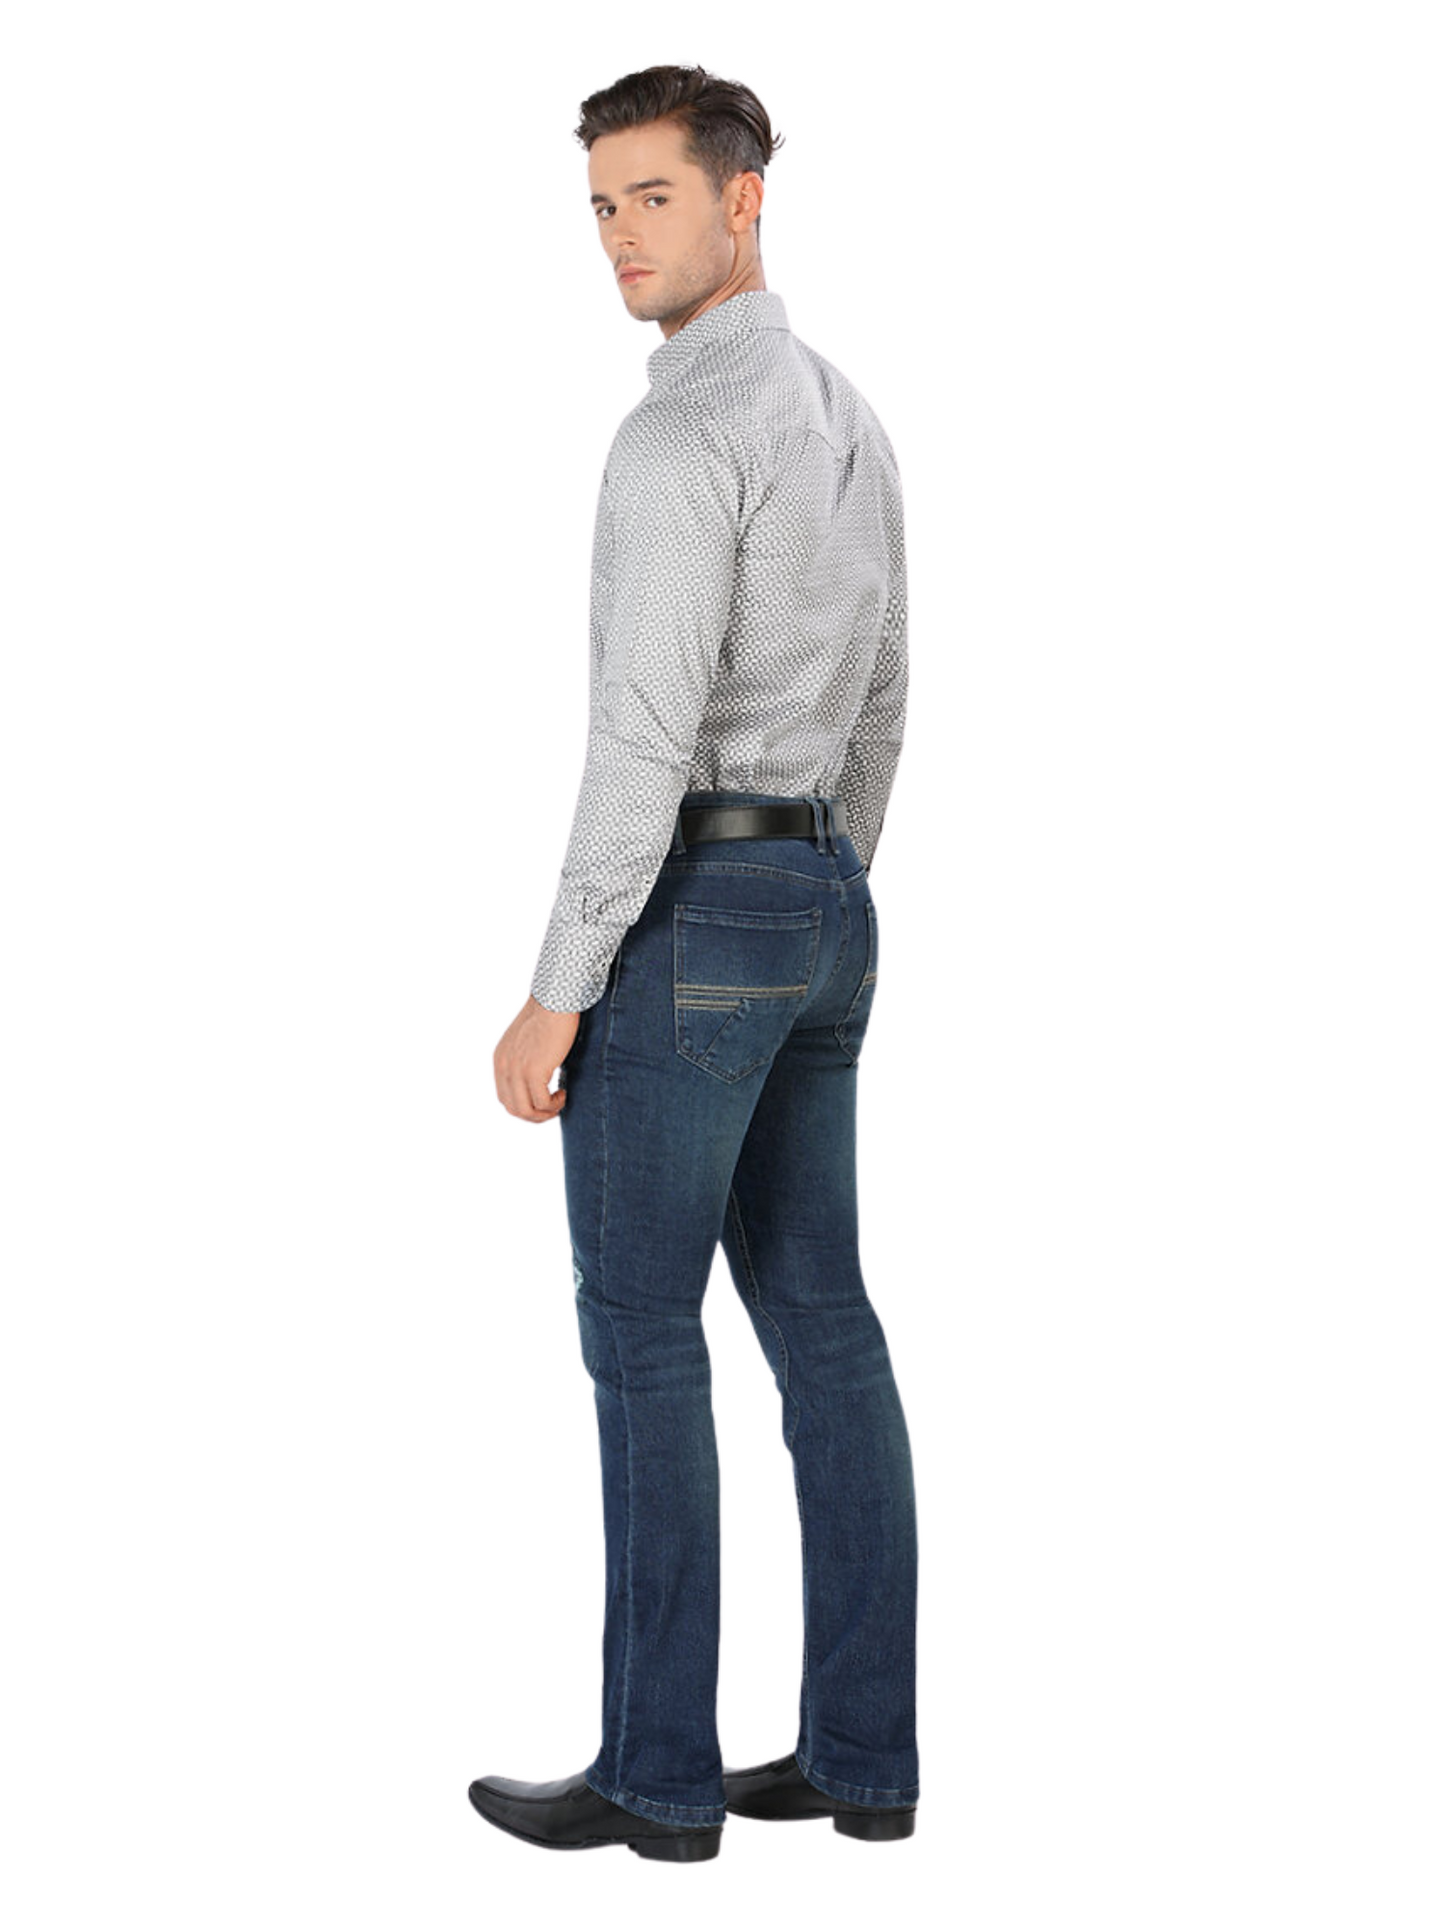 Pantalon Vaquero de Mezclilla Stretch para Hombre 'Montero' - ID: 2306 Denim Jeans Montero 